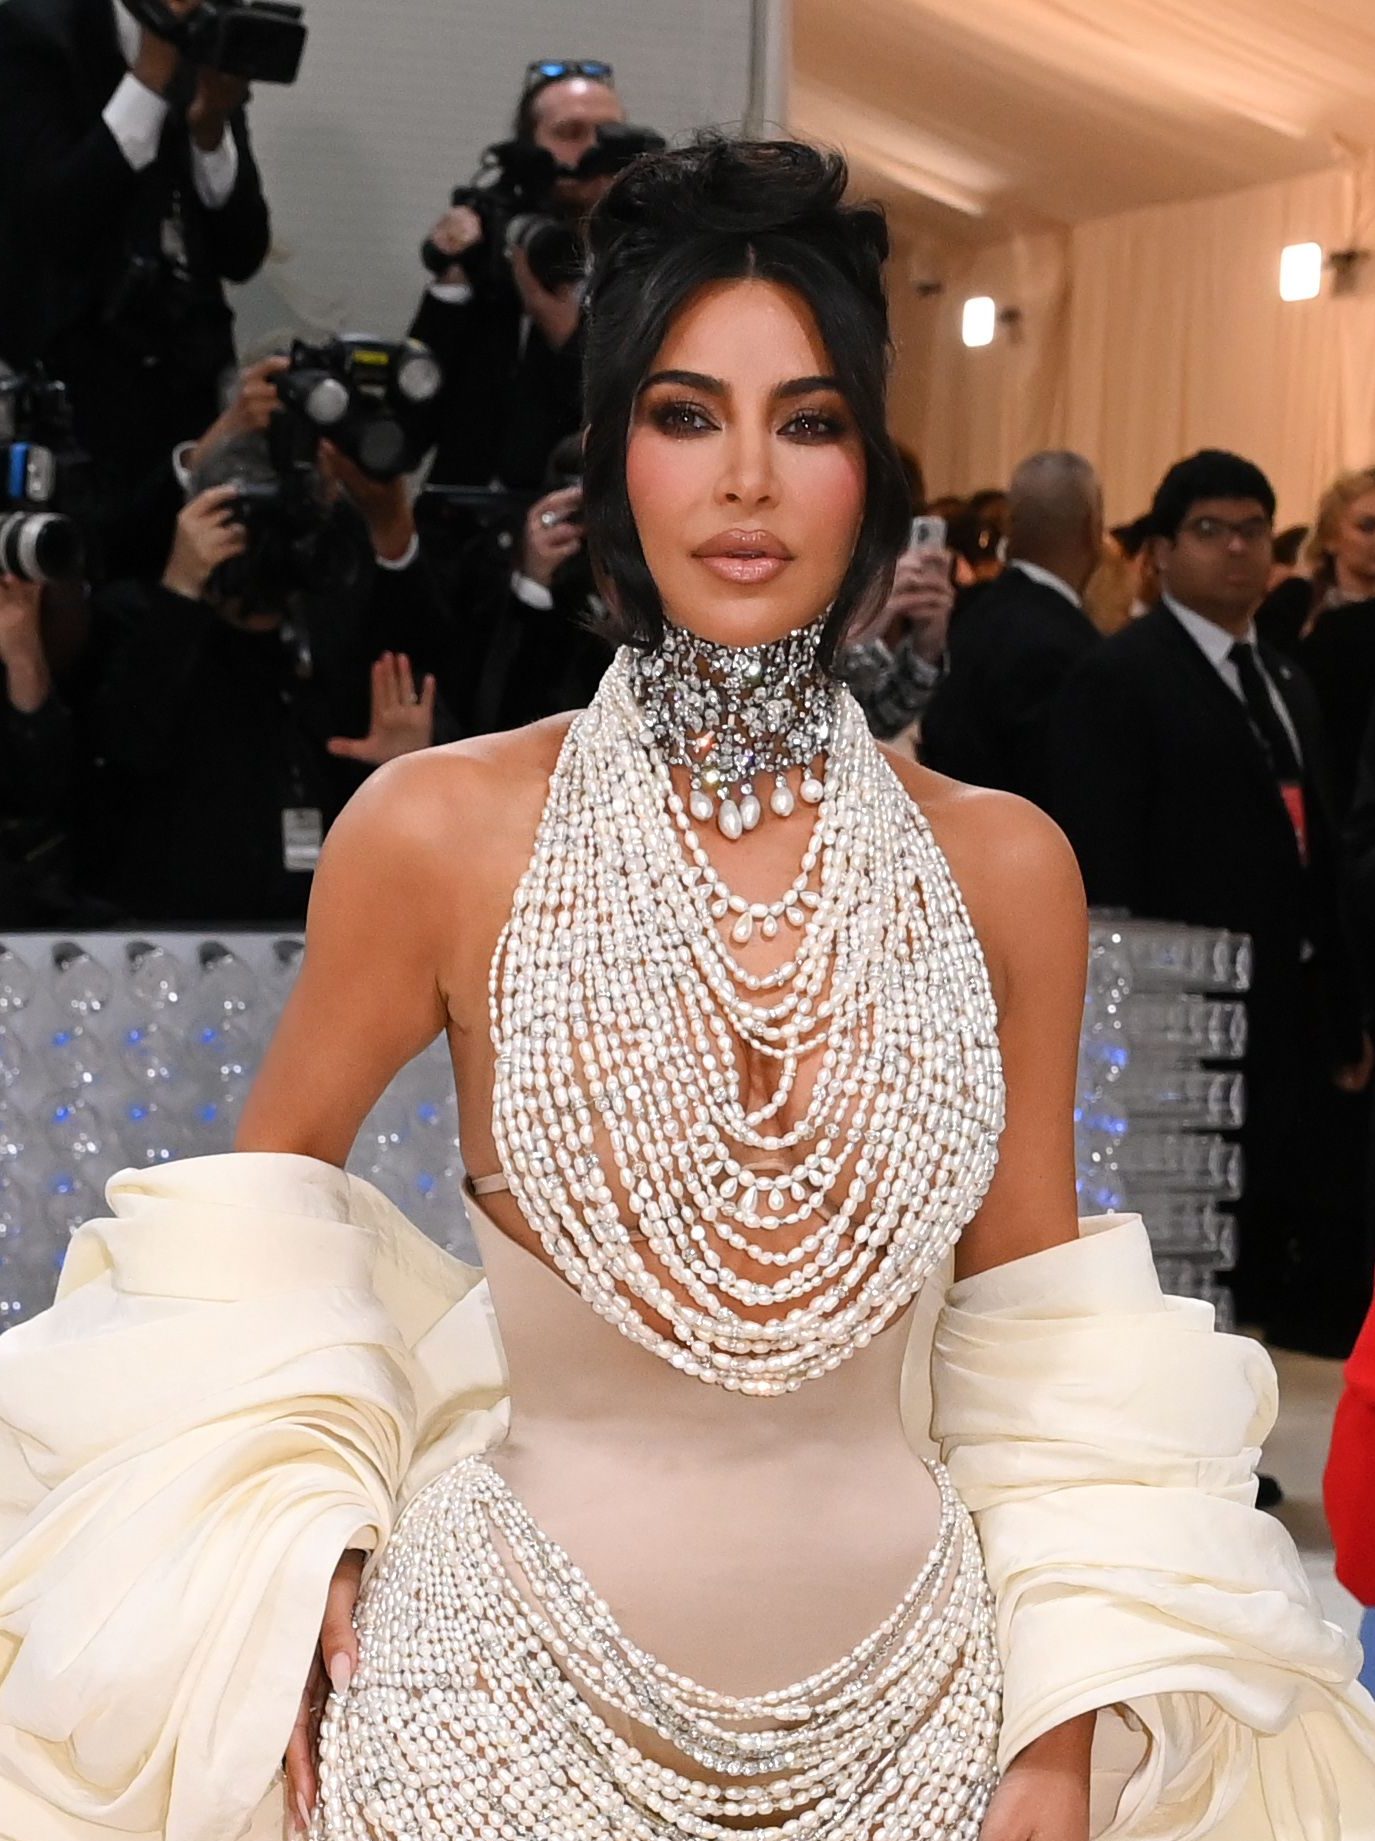 Met Gala 2023: Kim Kardashian Covers Curves in 50,000 Real Pearls